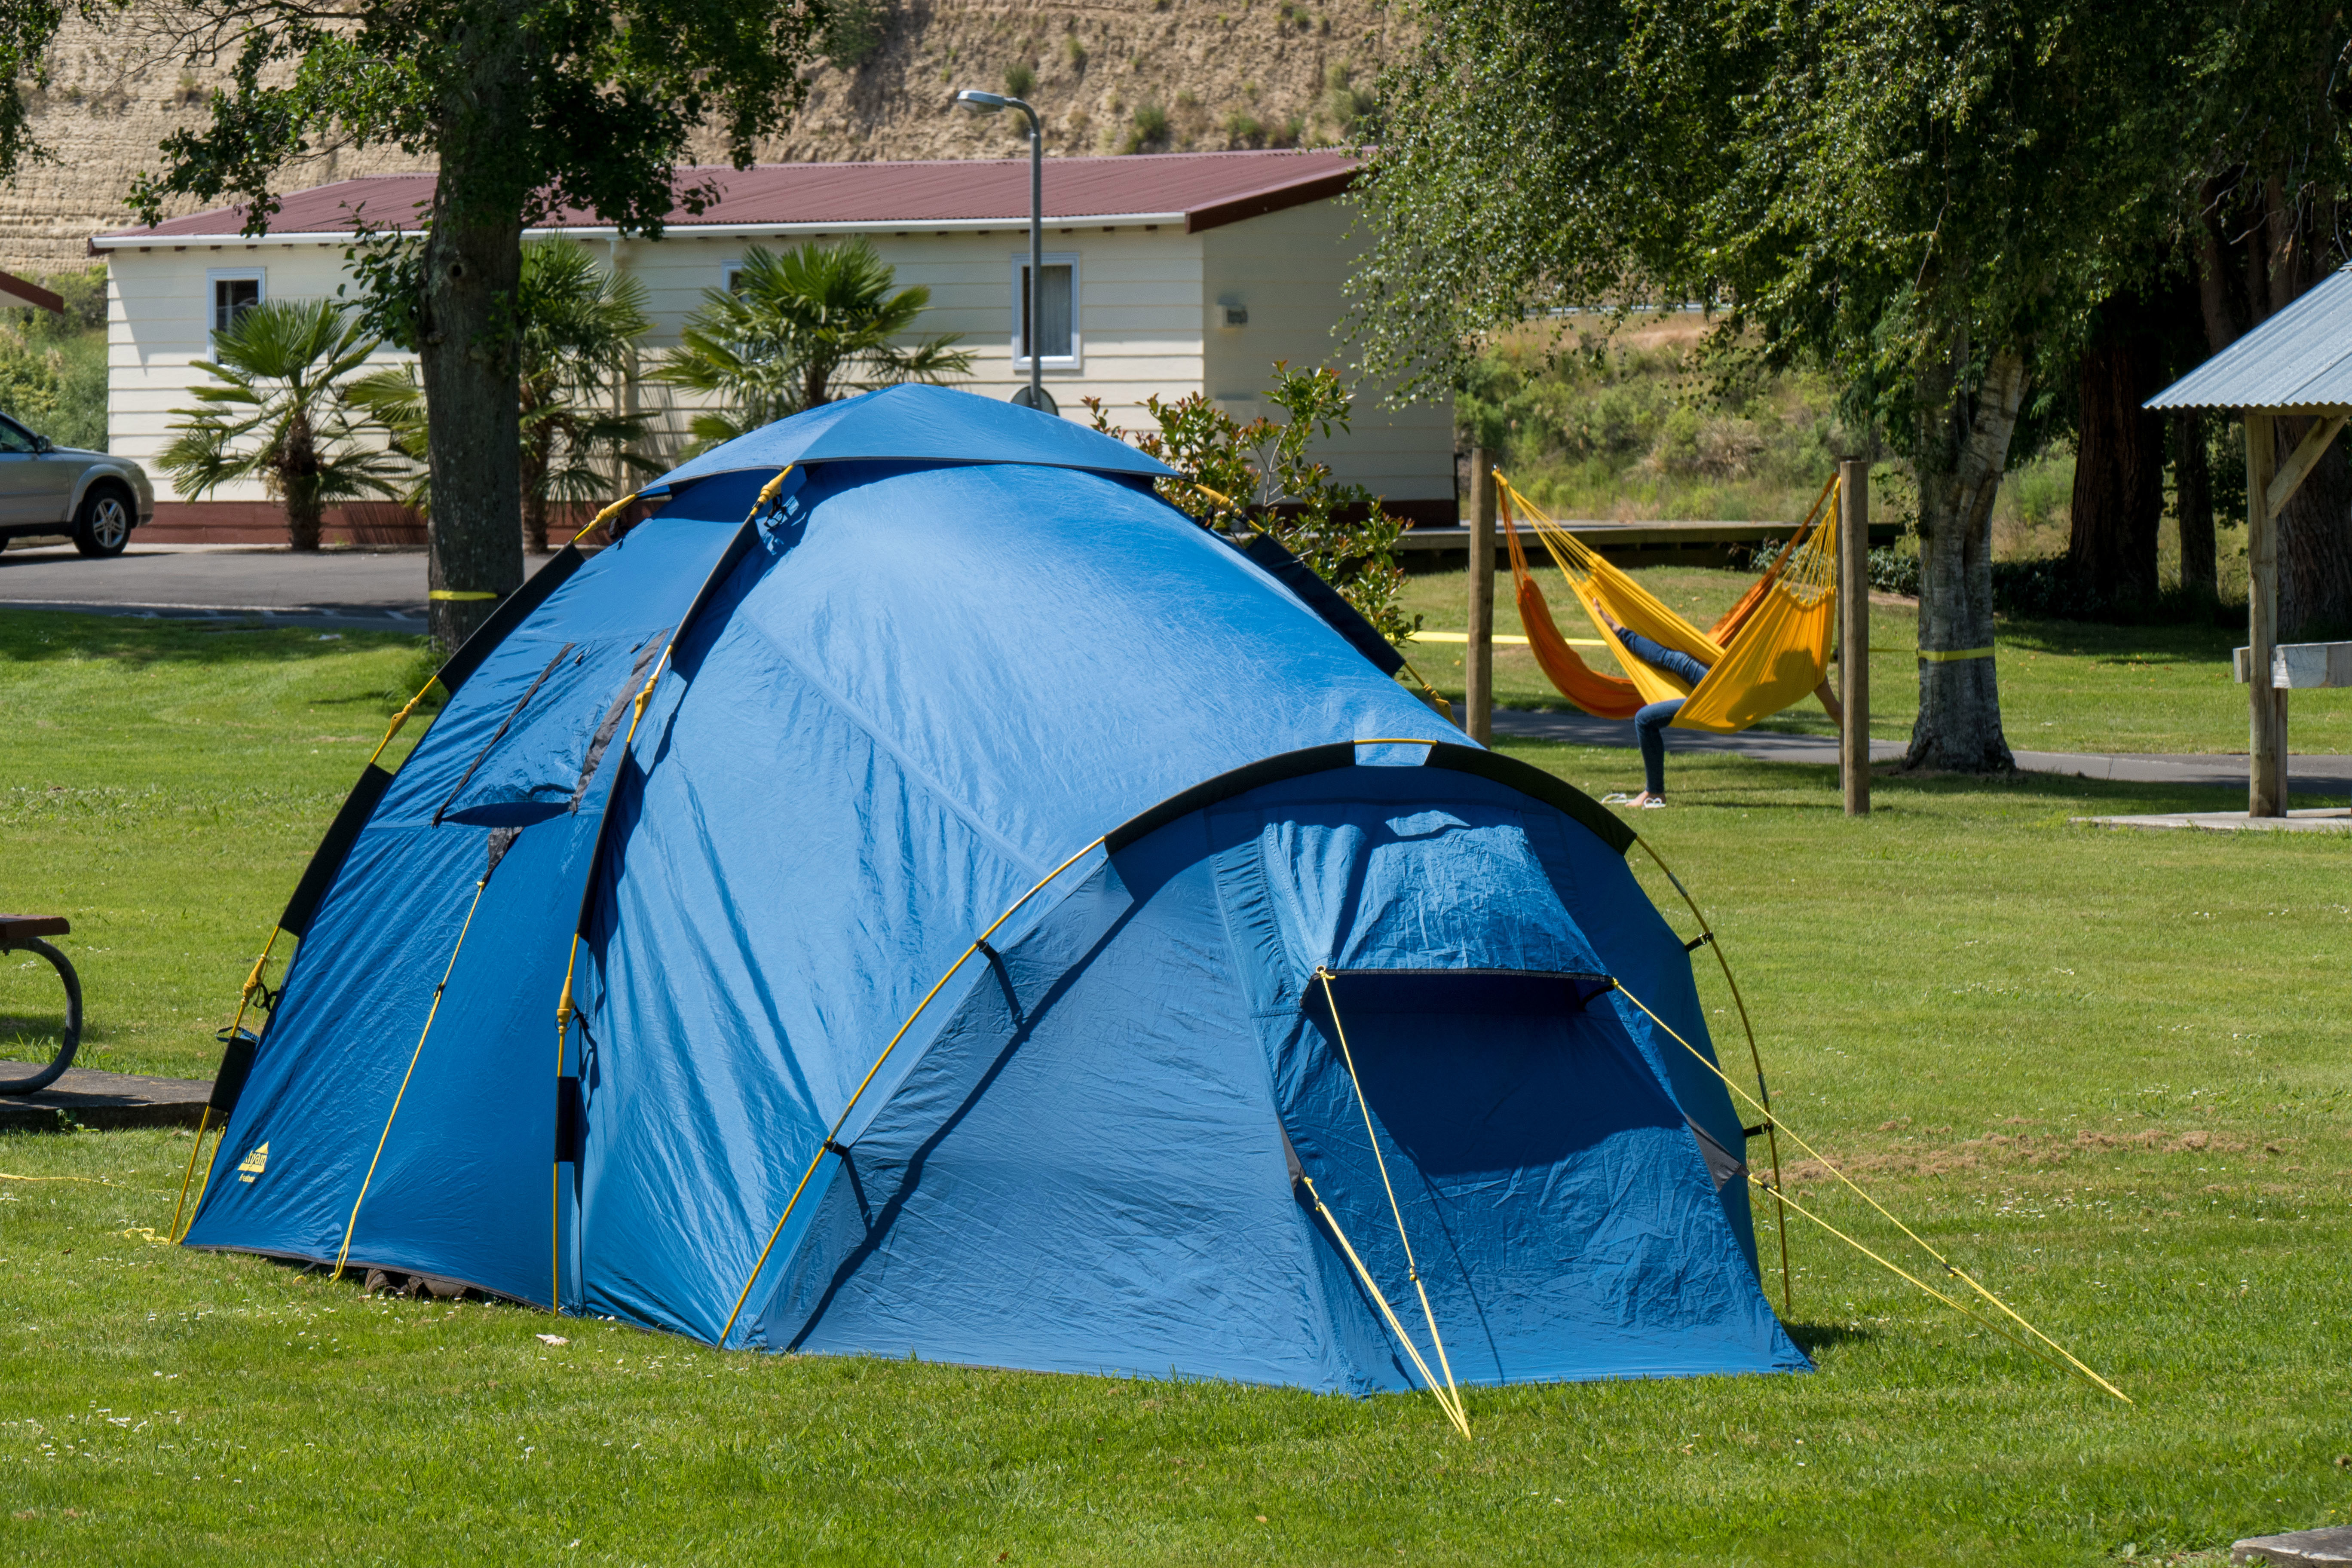 Whanganui River TOP 10 Holiday Park tent camping